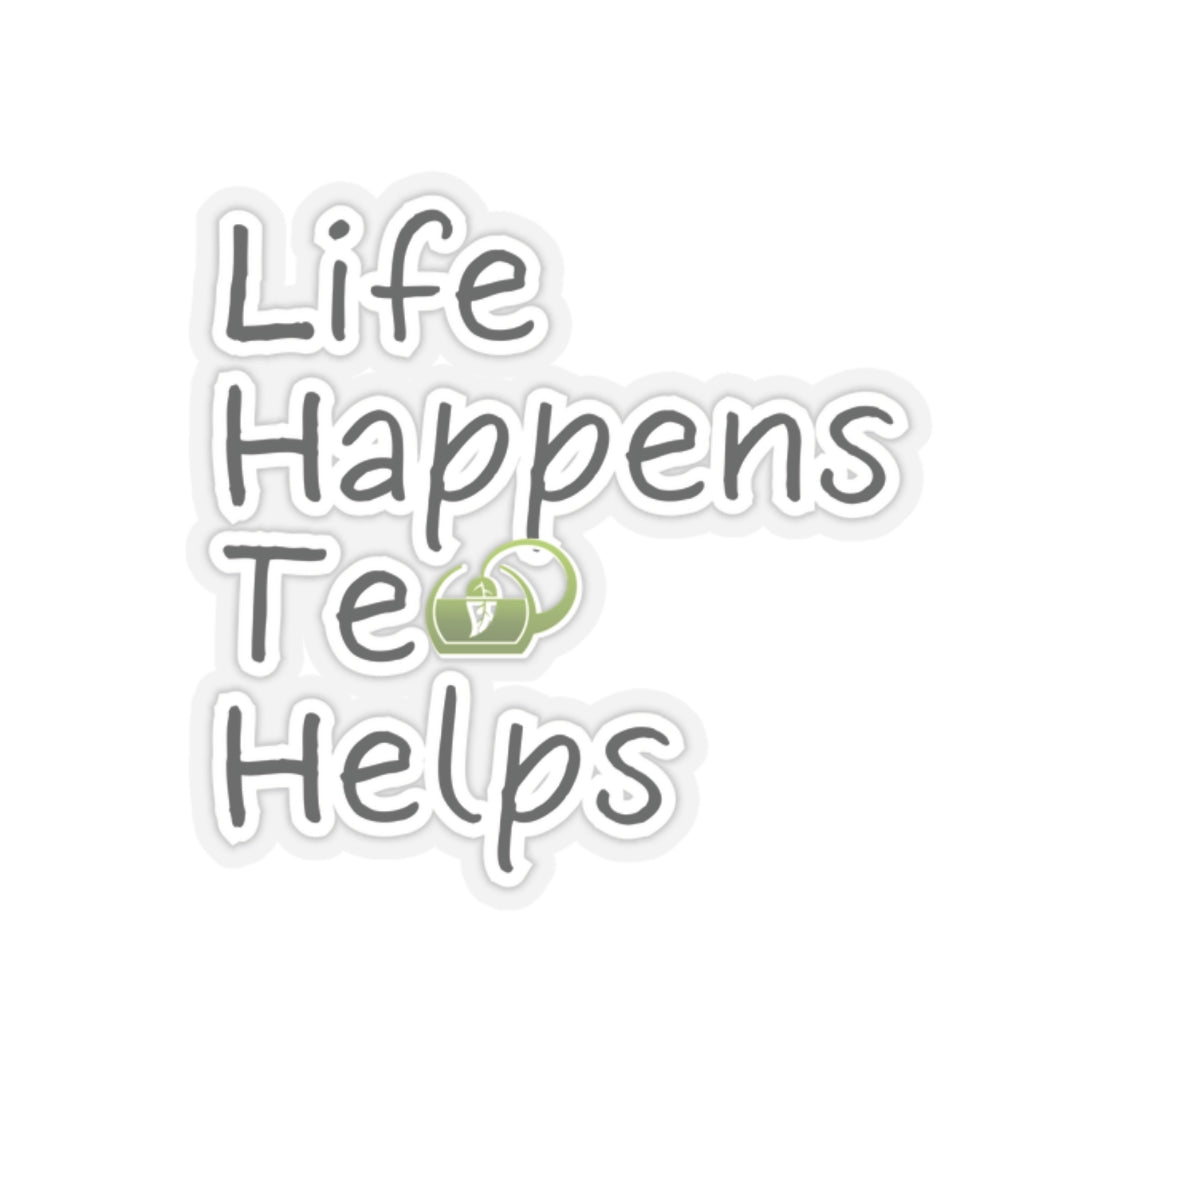 Life Happens Tea Helps Inspirational Quote Kiss-Cut Stickers-Paper products-2" × 2"-Transparent-mysticalcherry